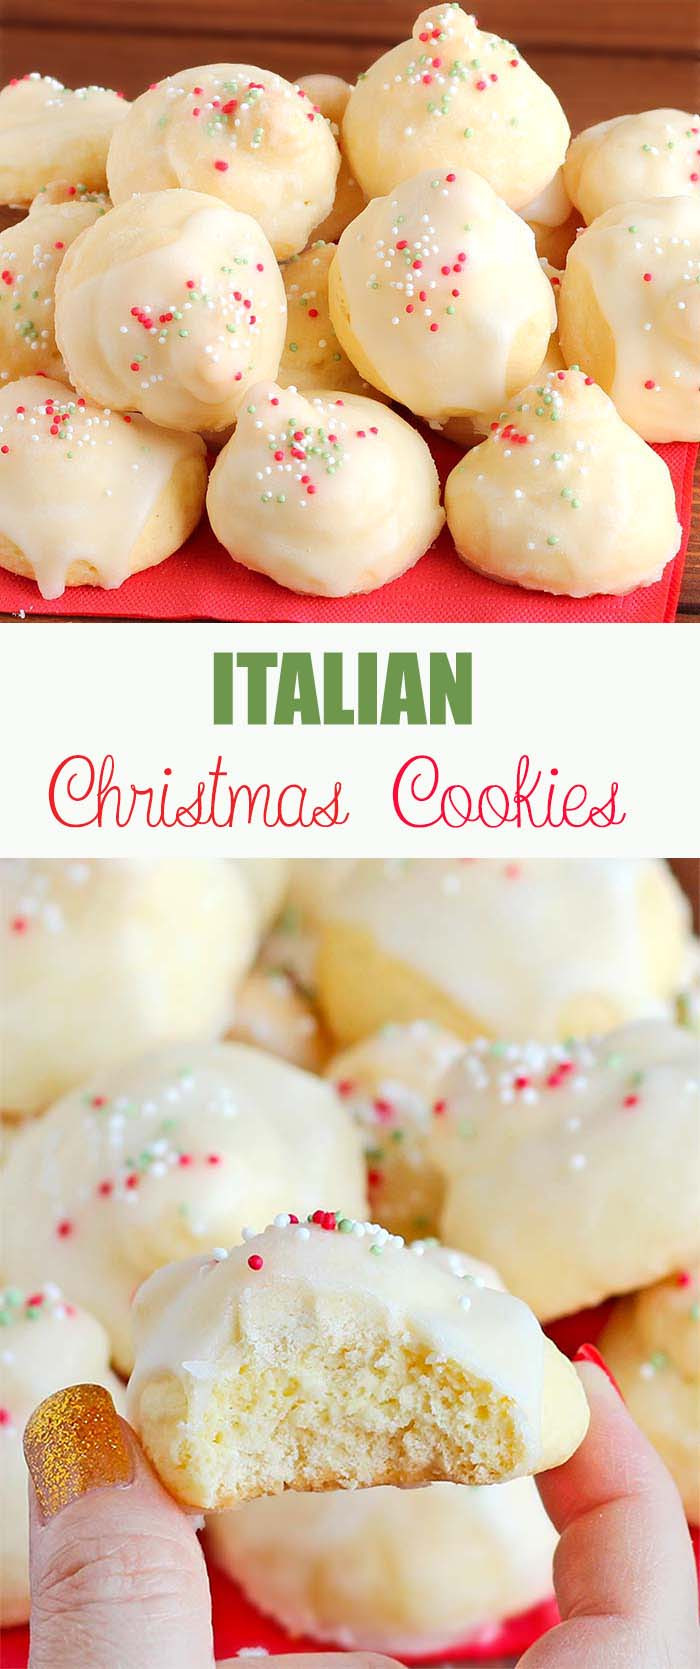 Popular Christmas Cookies Recipes
 Italian Christmas Cookies Cakescottage